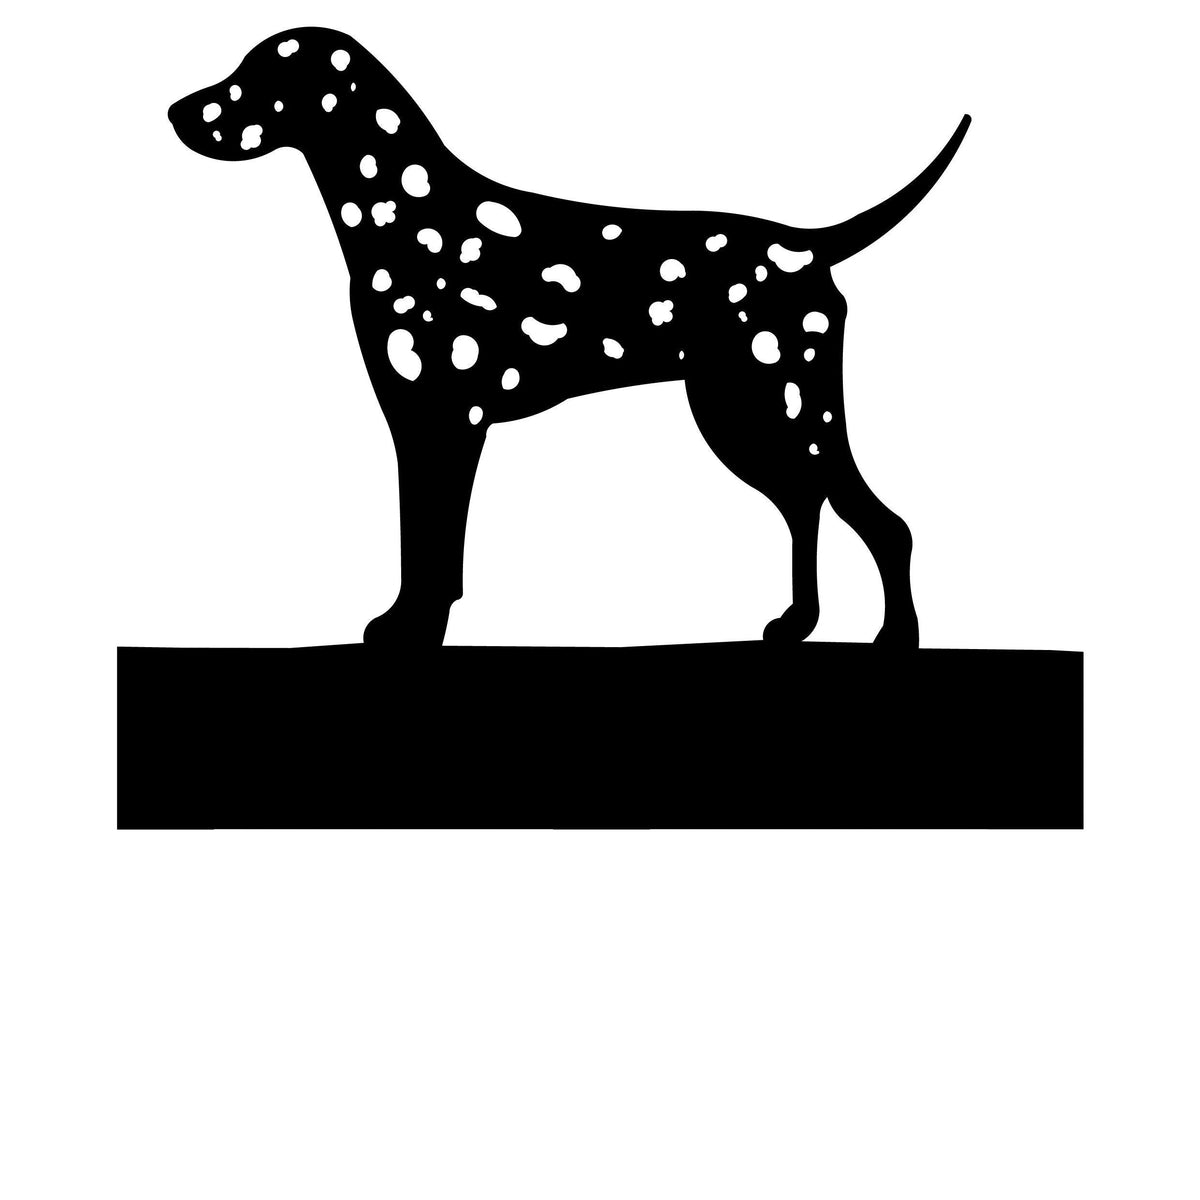 Dalmatian dog address stake